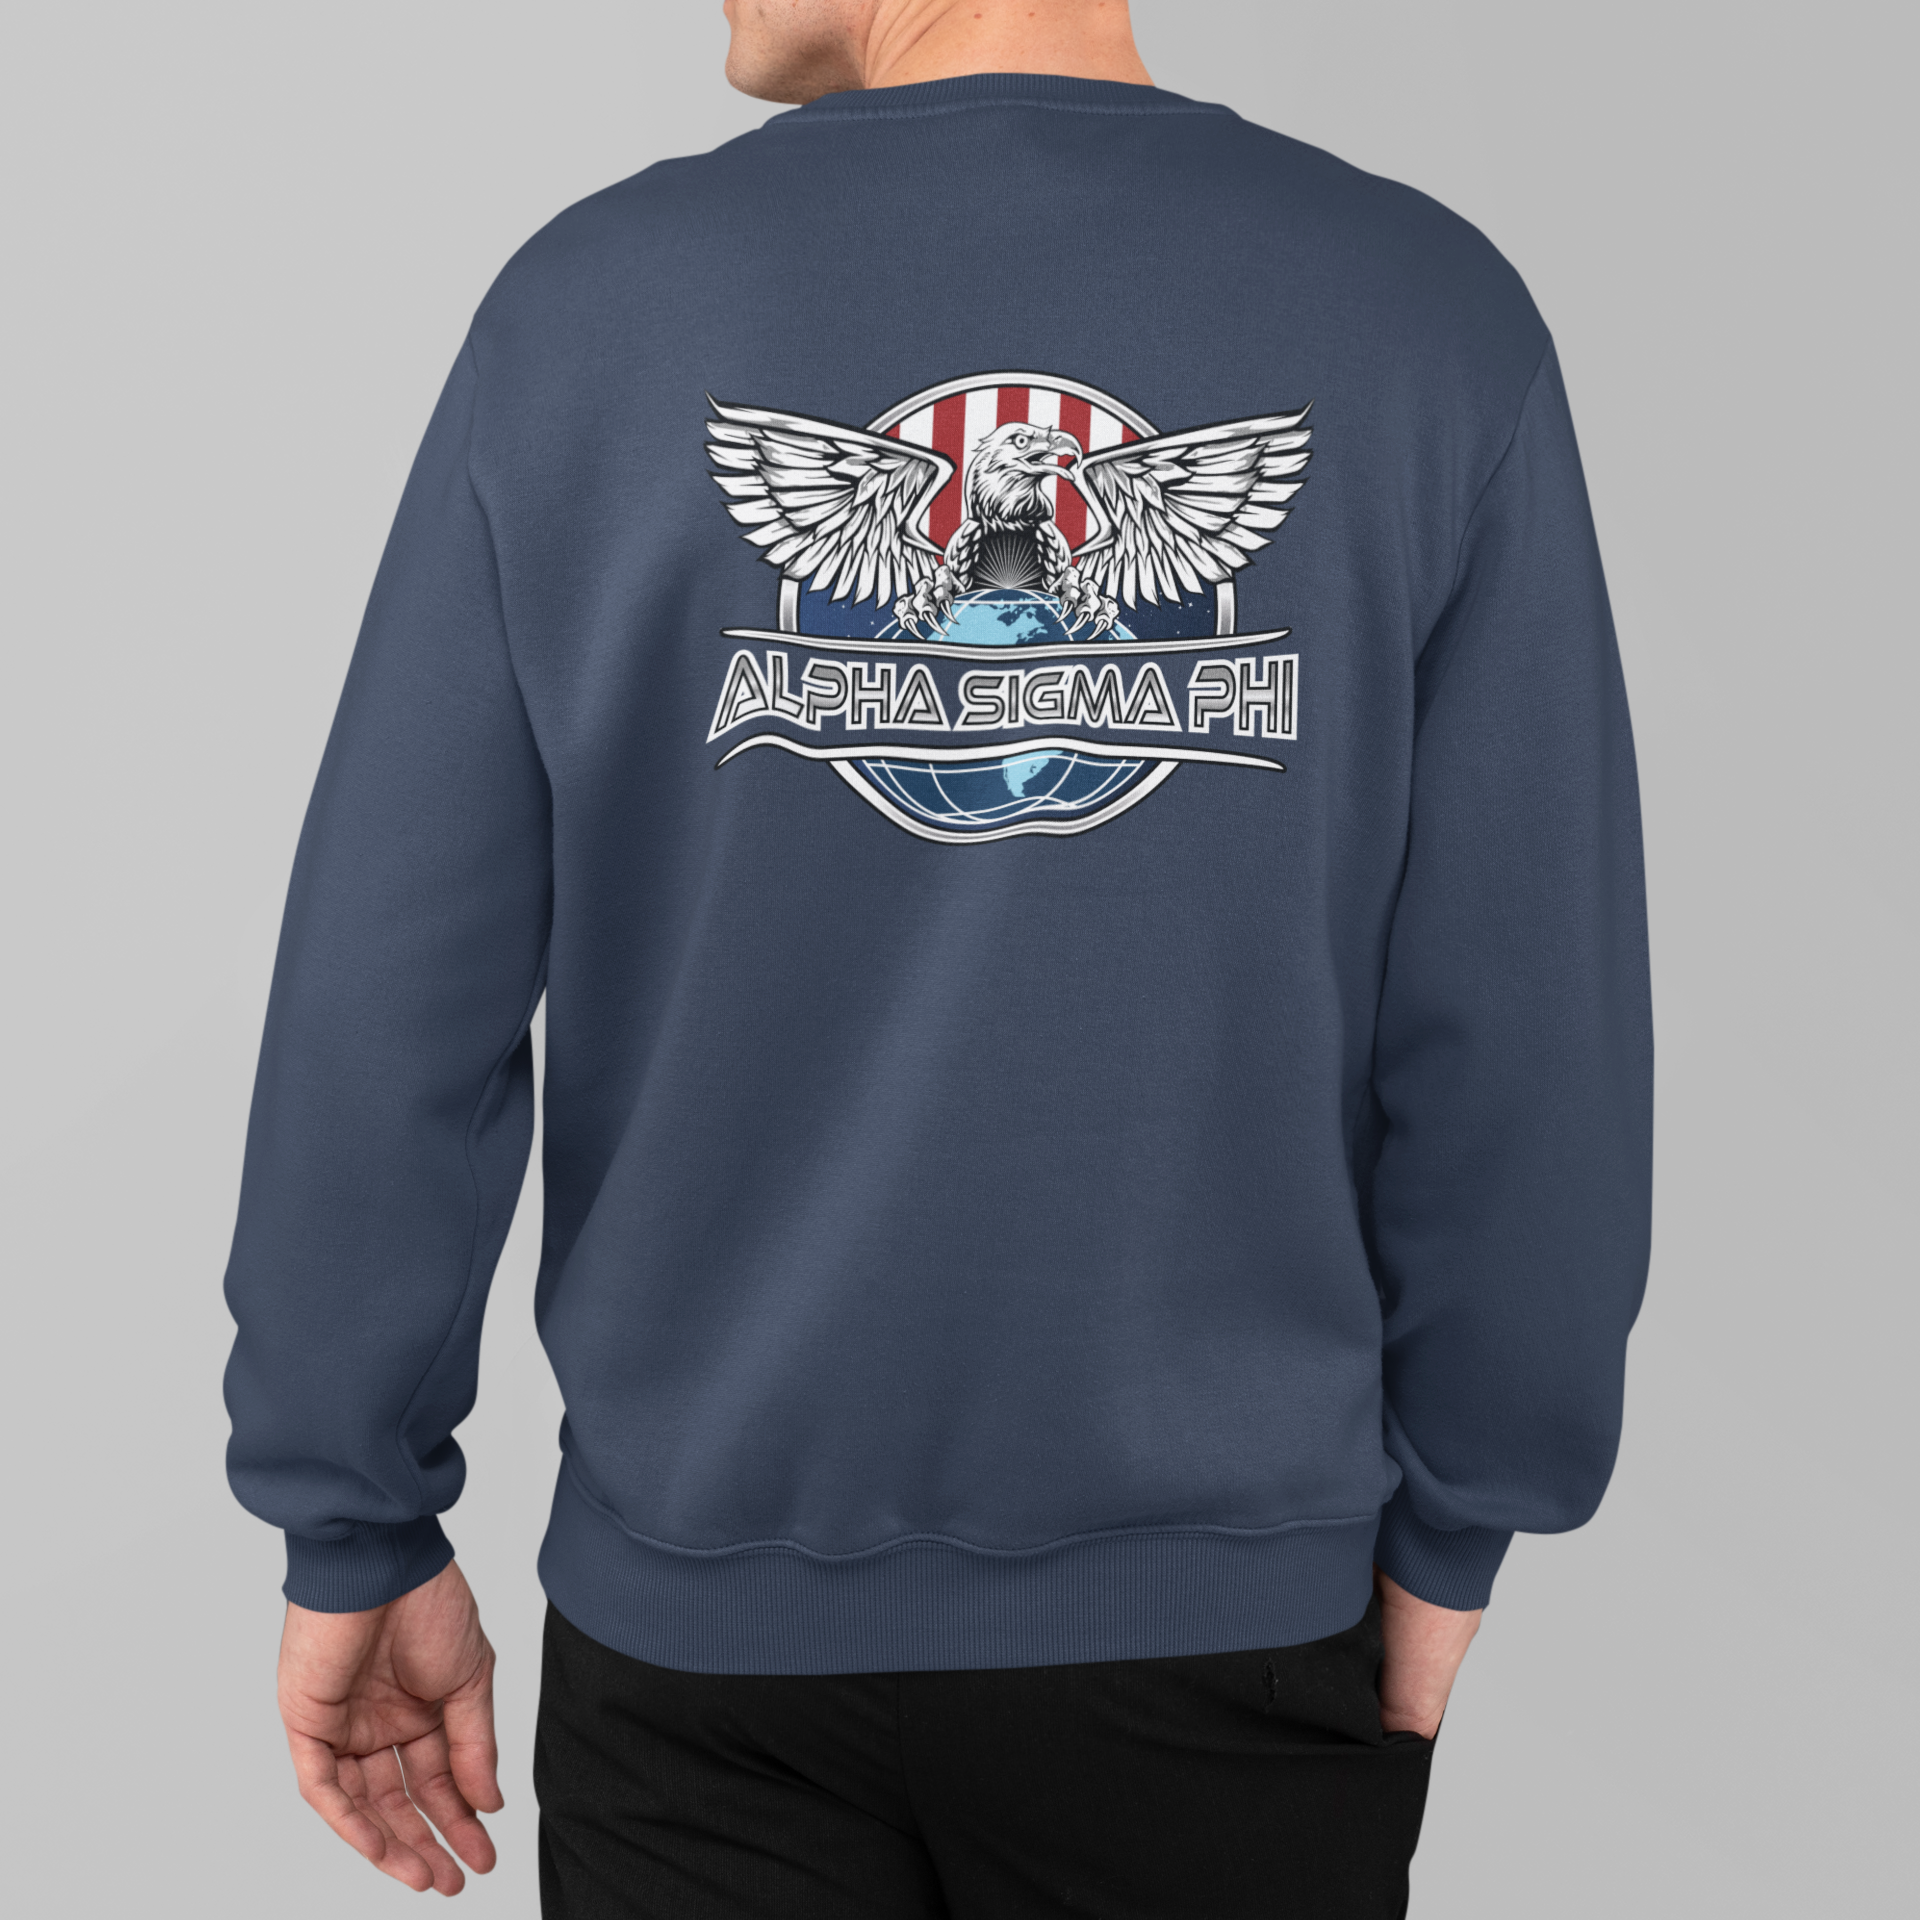 Navy Alpha Sigma Phi Graphic Crewneck Sweatshirt | The Fraternal Order | Alpha Sigma Phi Fraternity Clothes  back model 